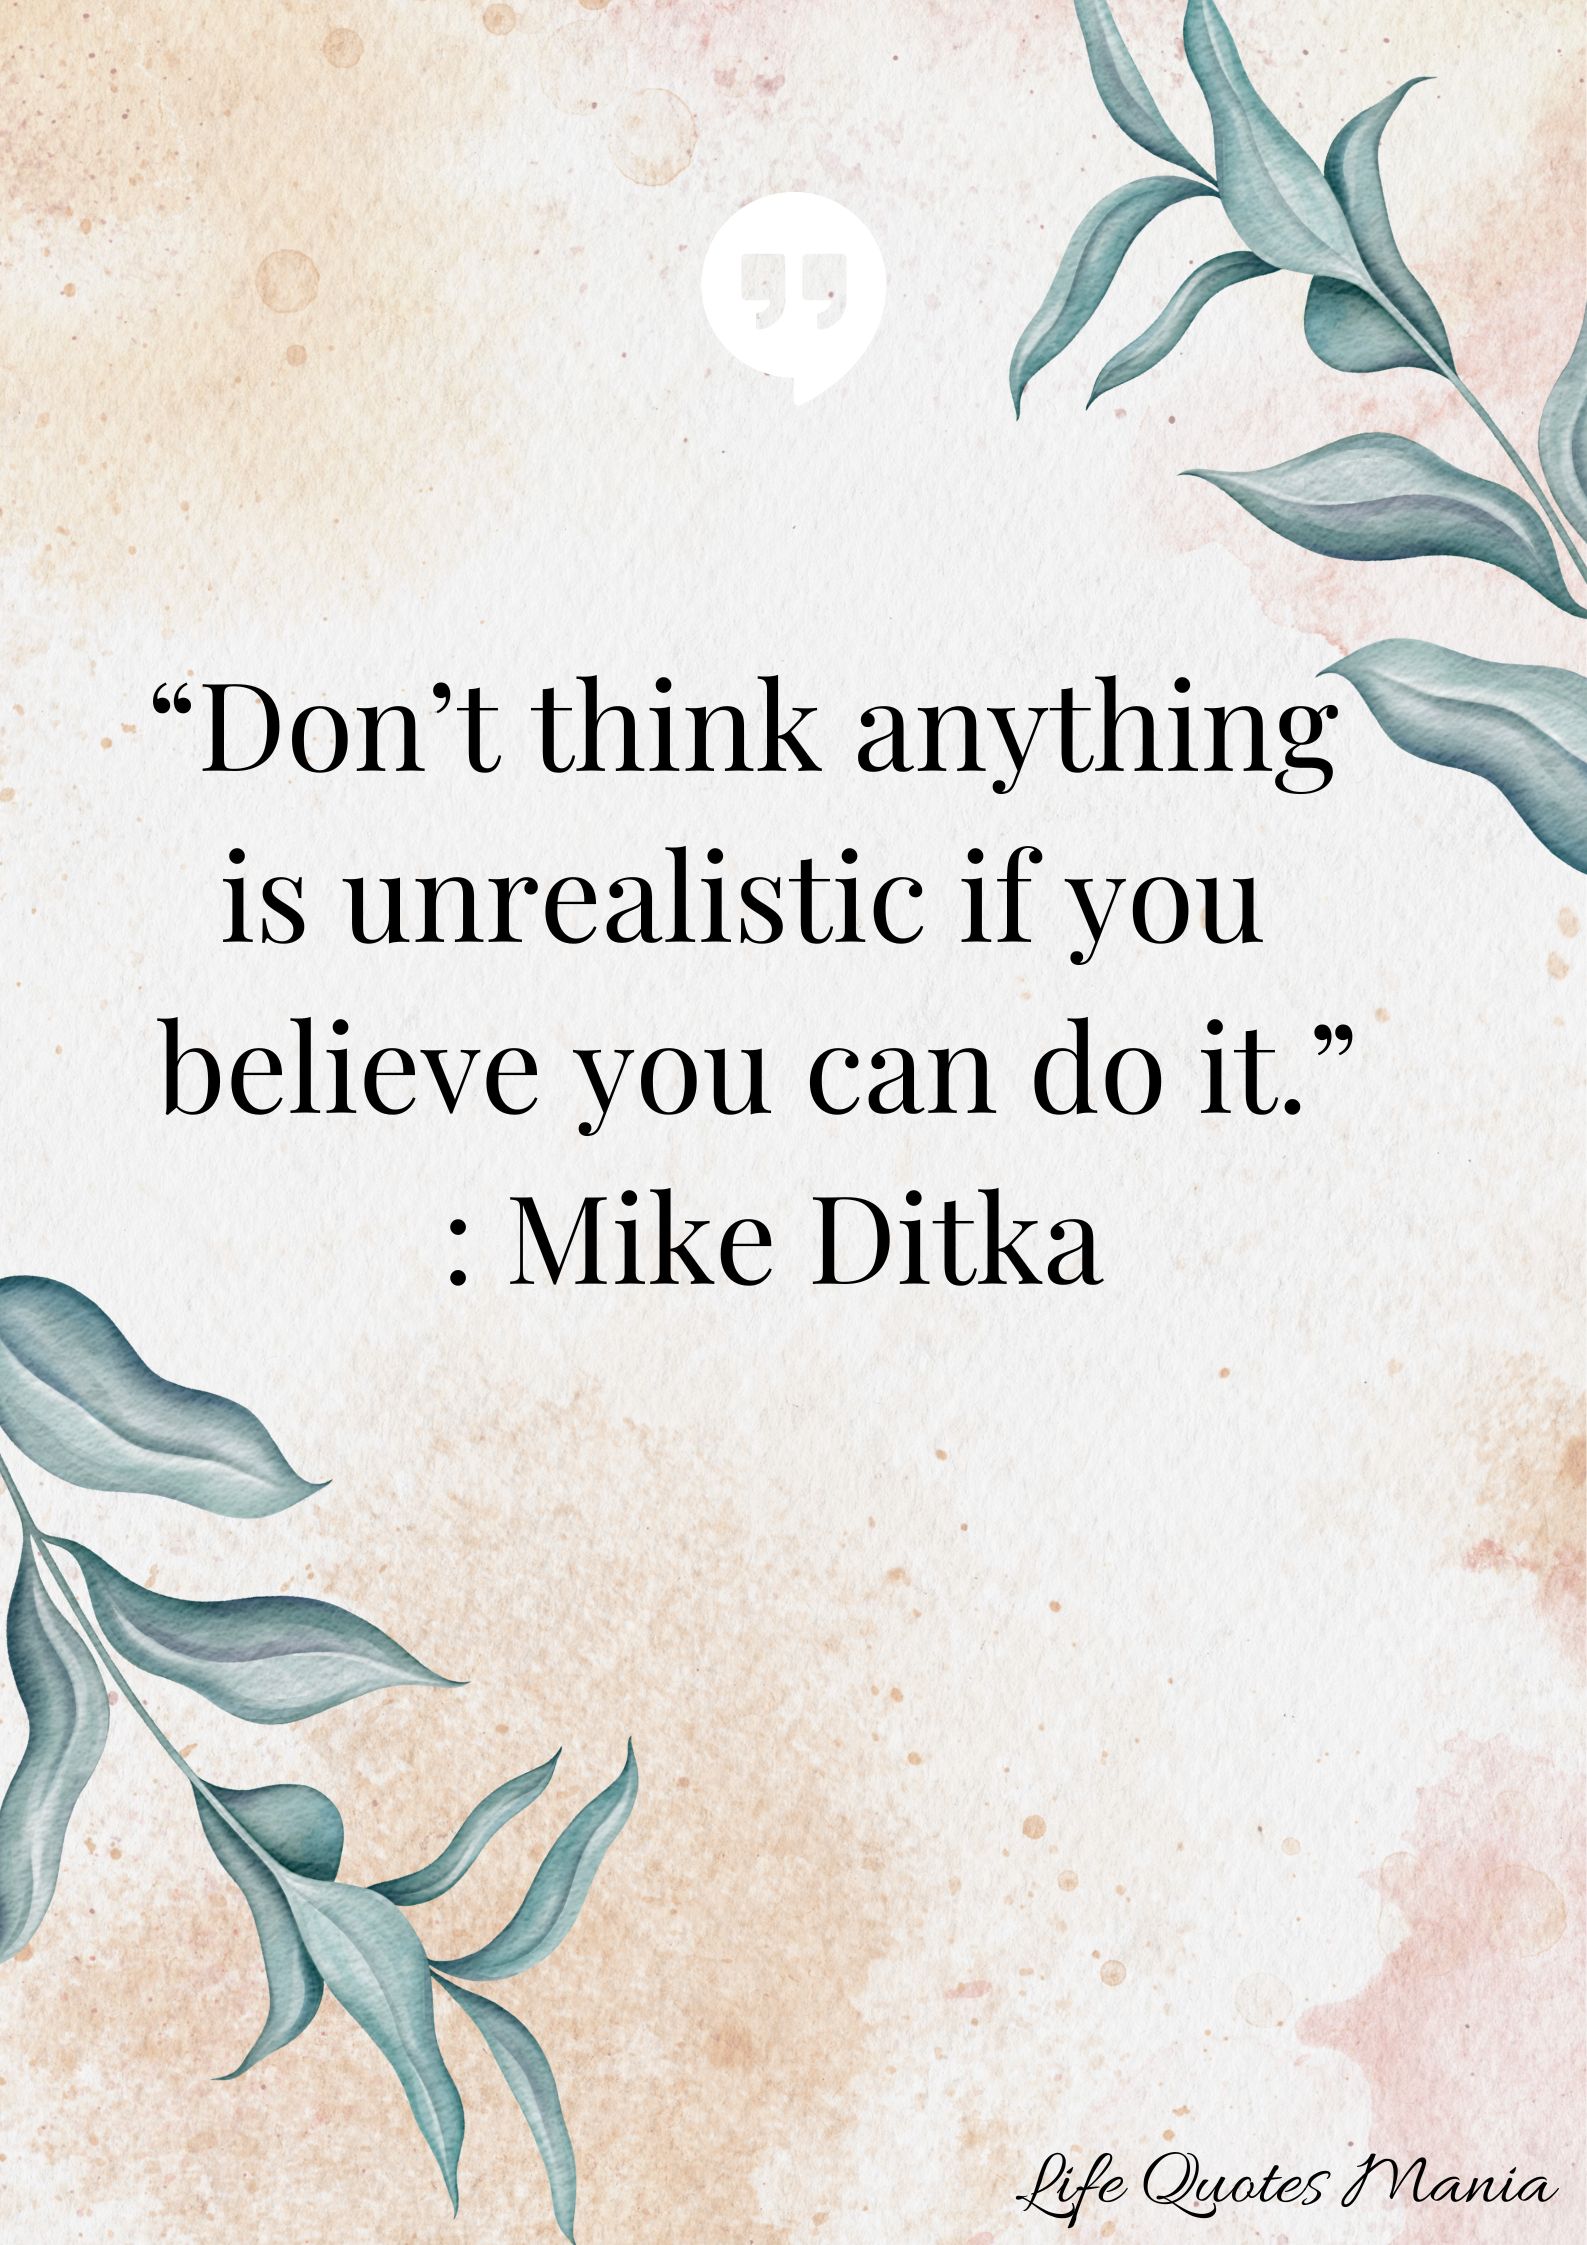 Attitude Quote - Mike Ditka